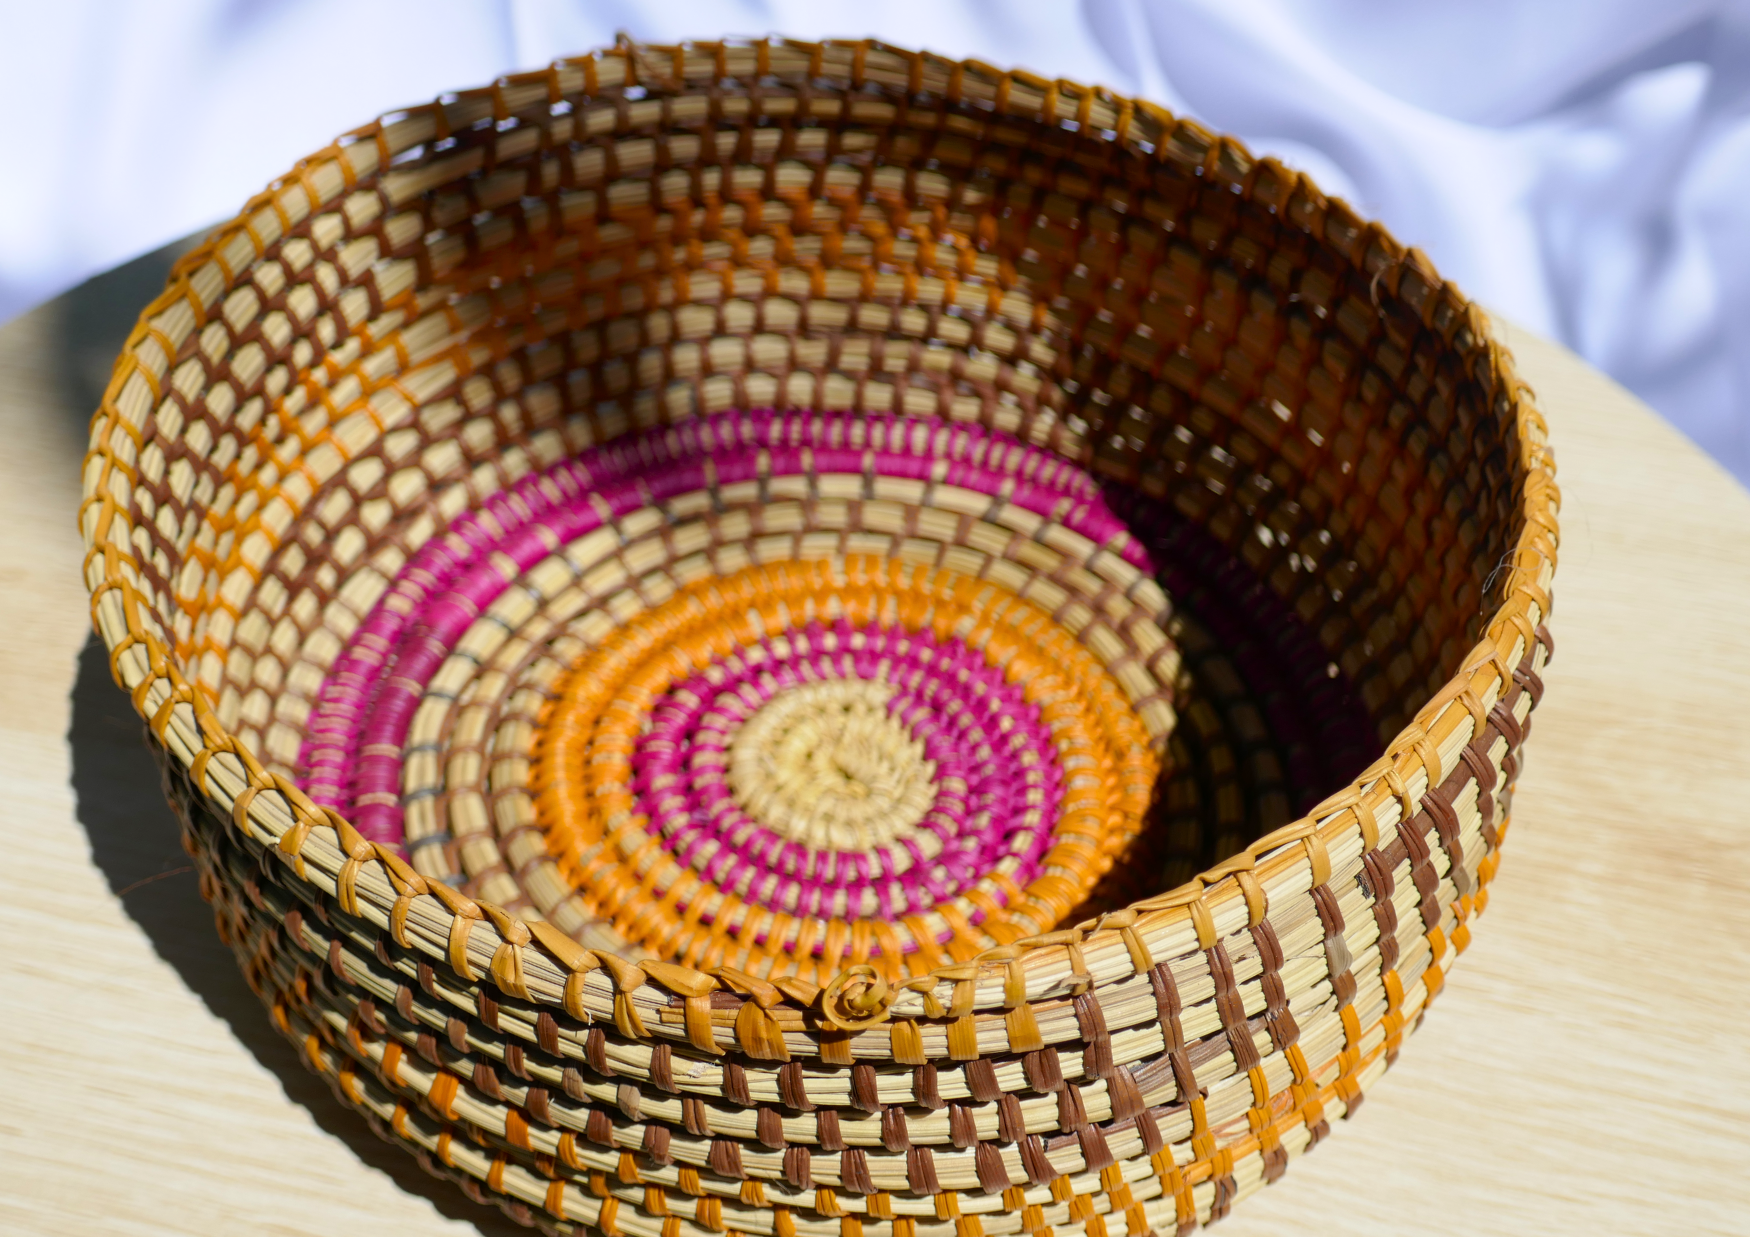 Authentic Aboriginal Pandanus grass weaving done by Daluk (women) of Kakadu.